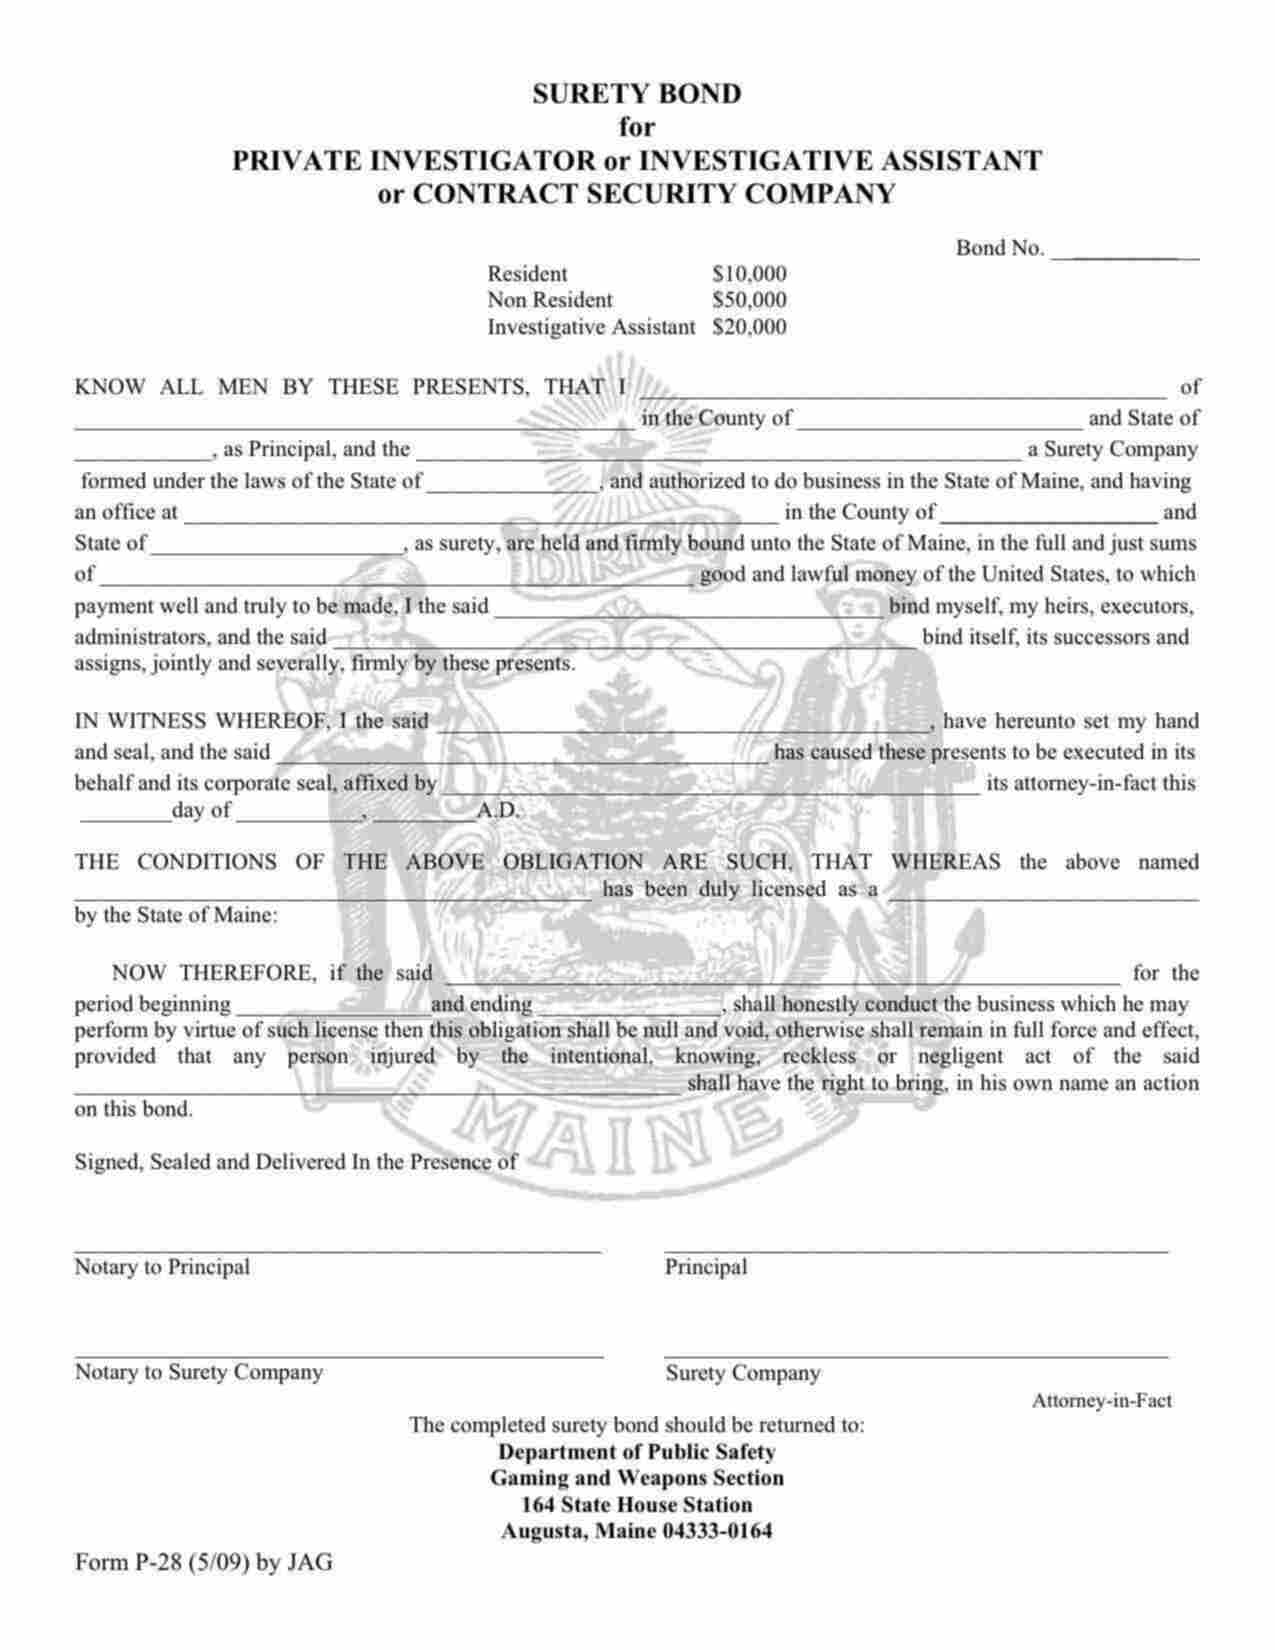 Maine Private Investigator: Non-Resident Bond Form